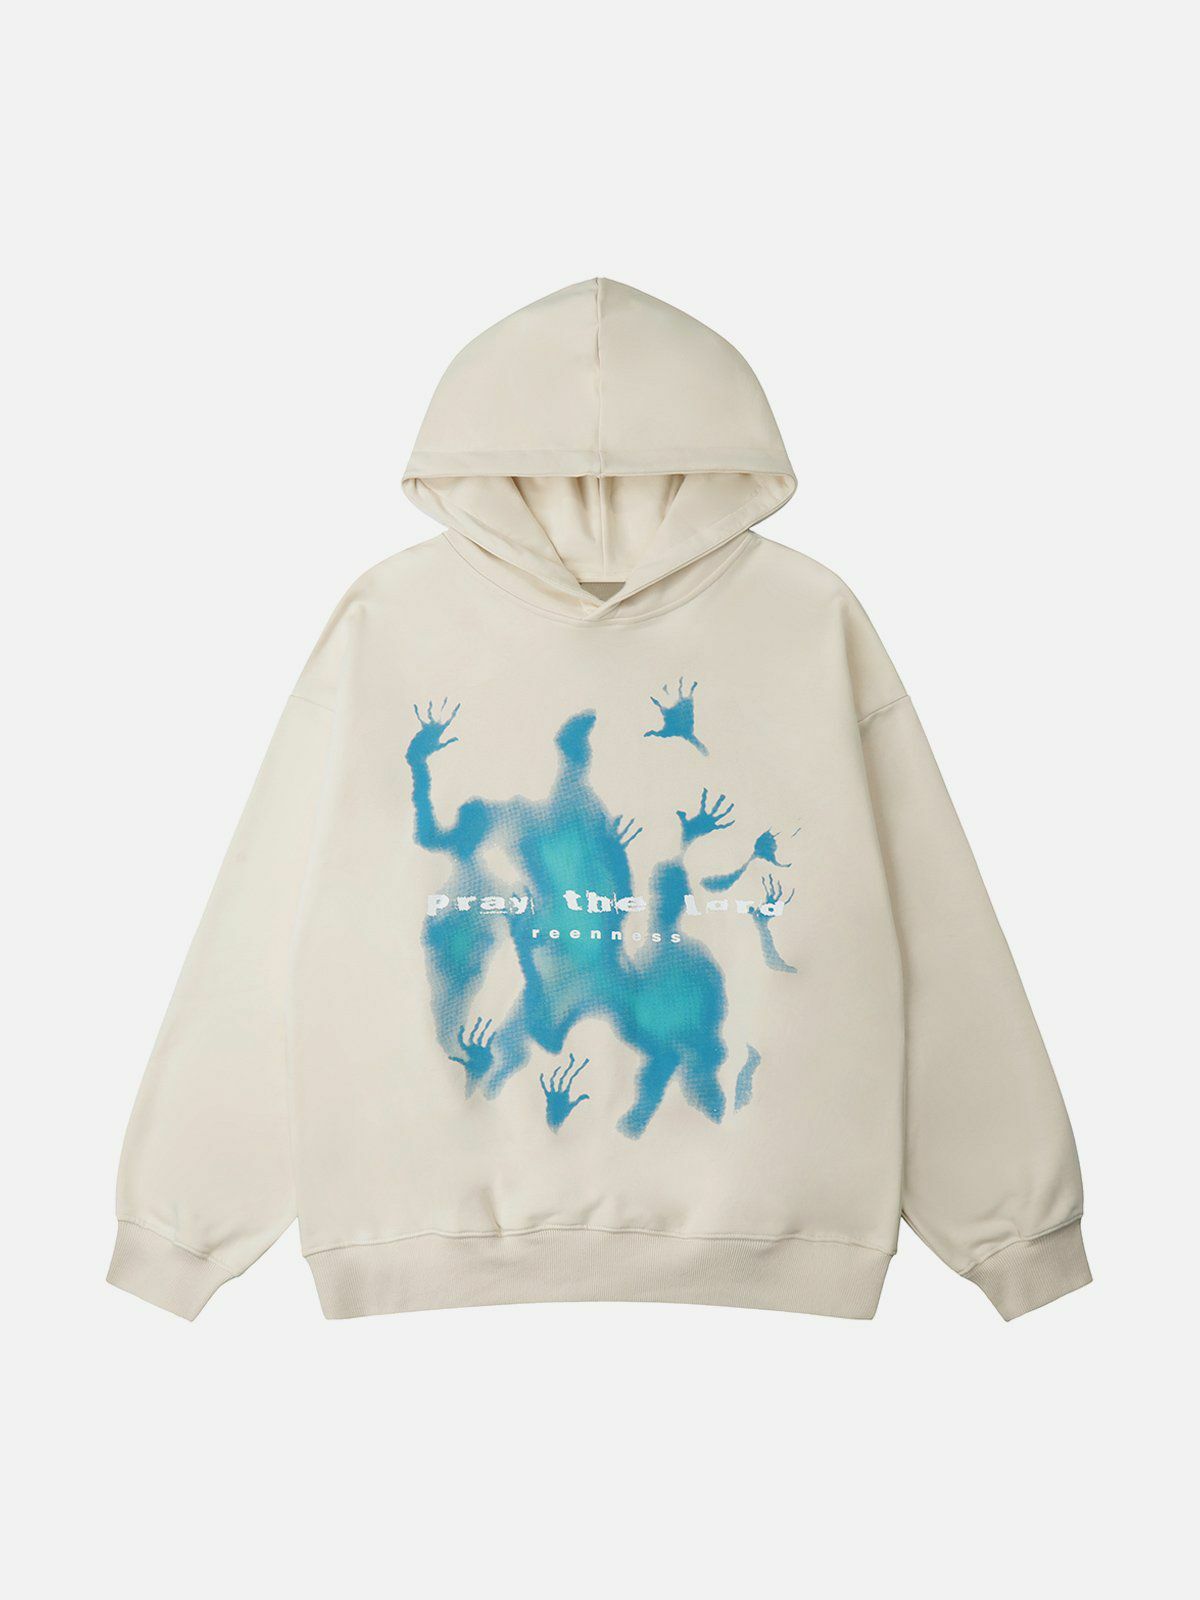 shadow print hoodie edgy & abstract streetwear 7812